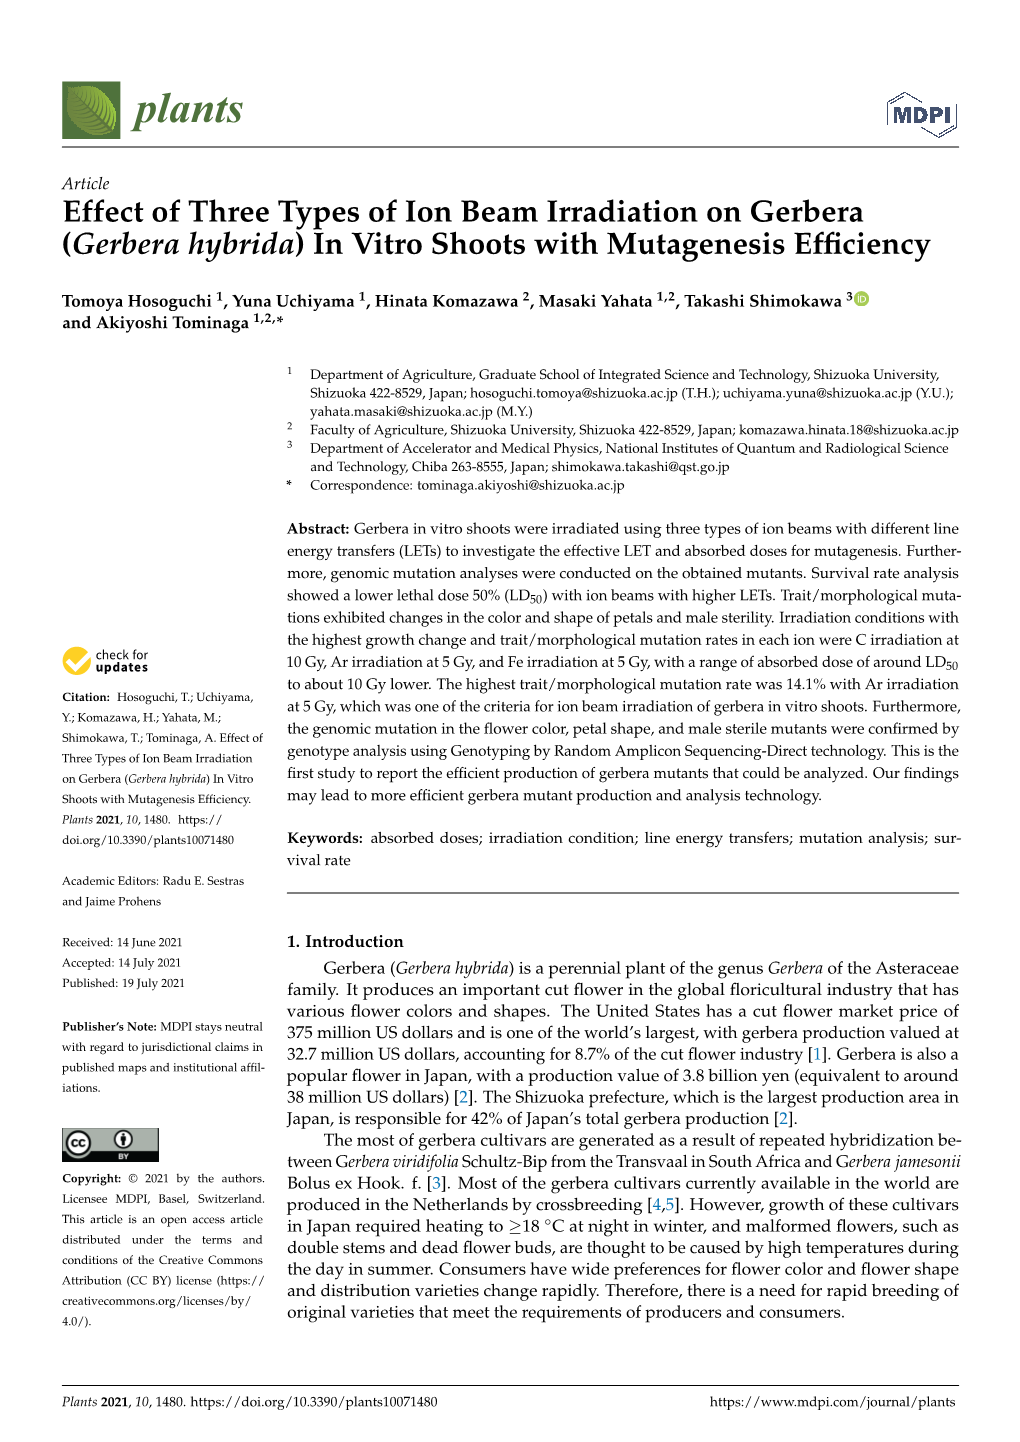 Effect of Three Types of Ion Beam Irradiation on Gerbera (Gerbera Hybrida) in Vitro Shoots with Mutagenesis Efﬁciency